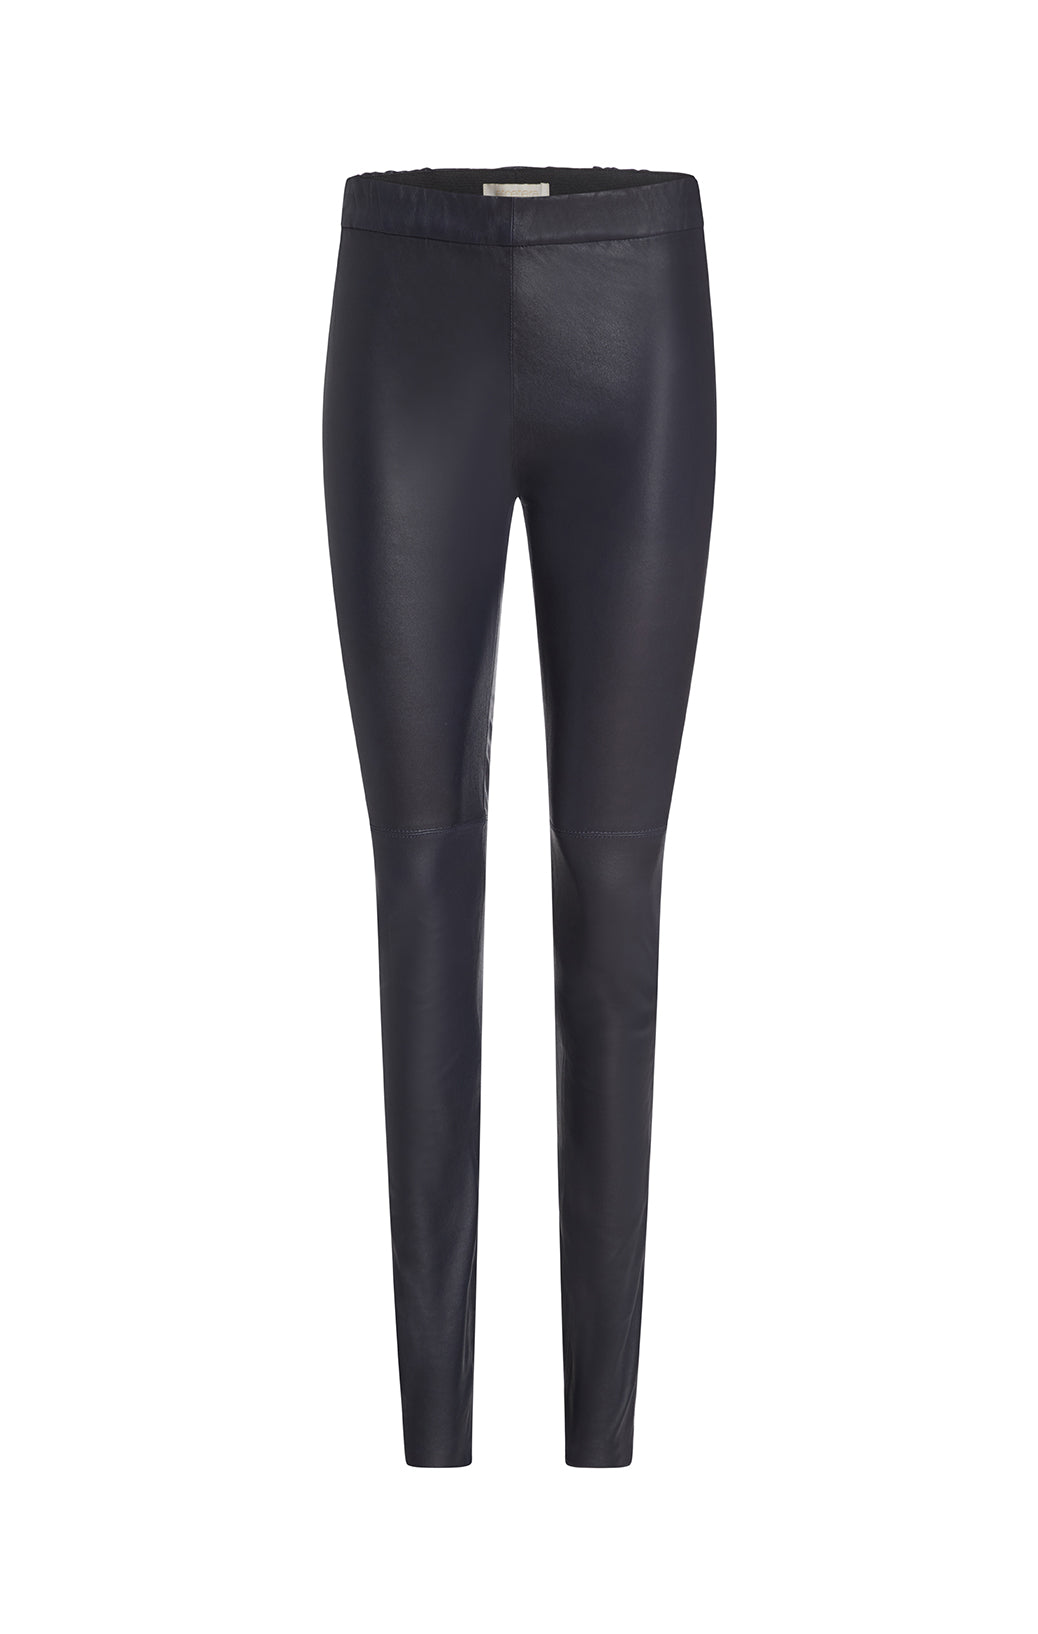 Licorice - Black Velveteen Jeans - Product Image